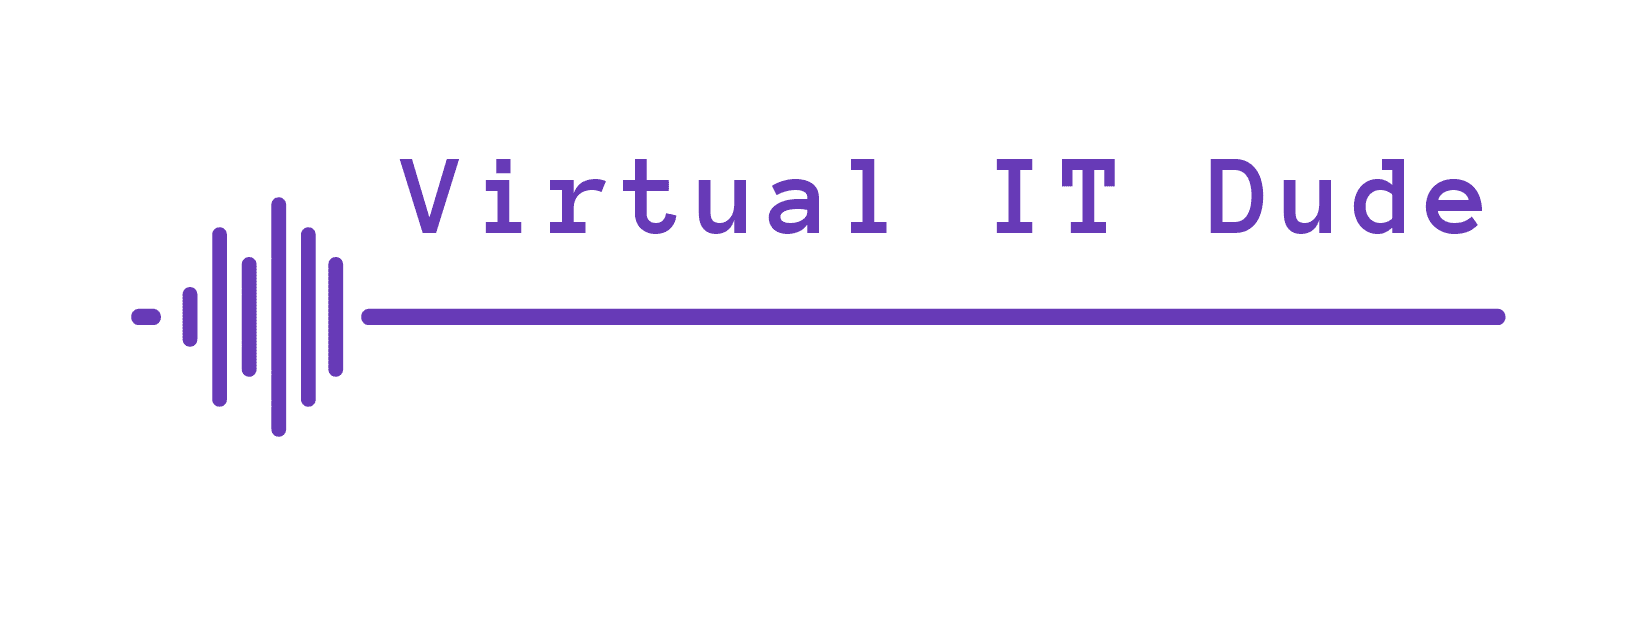 Virtual IT Dude